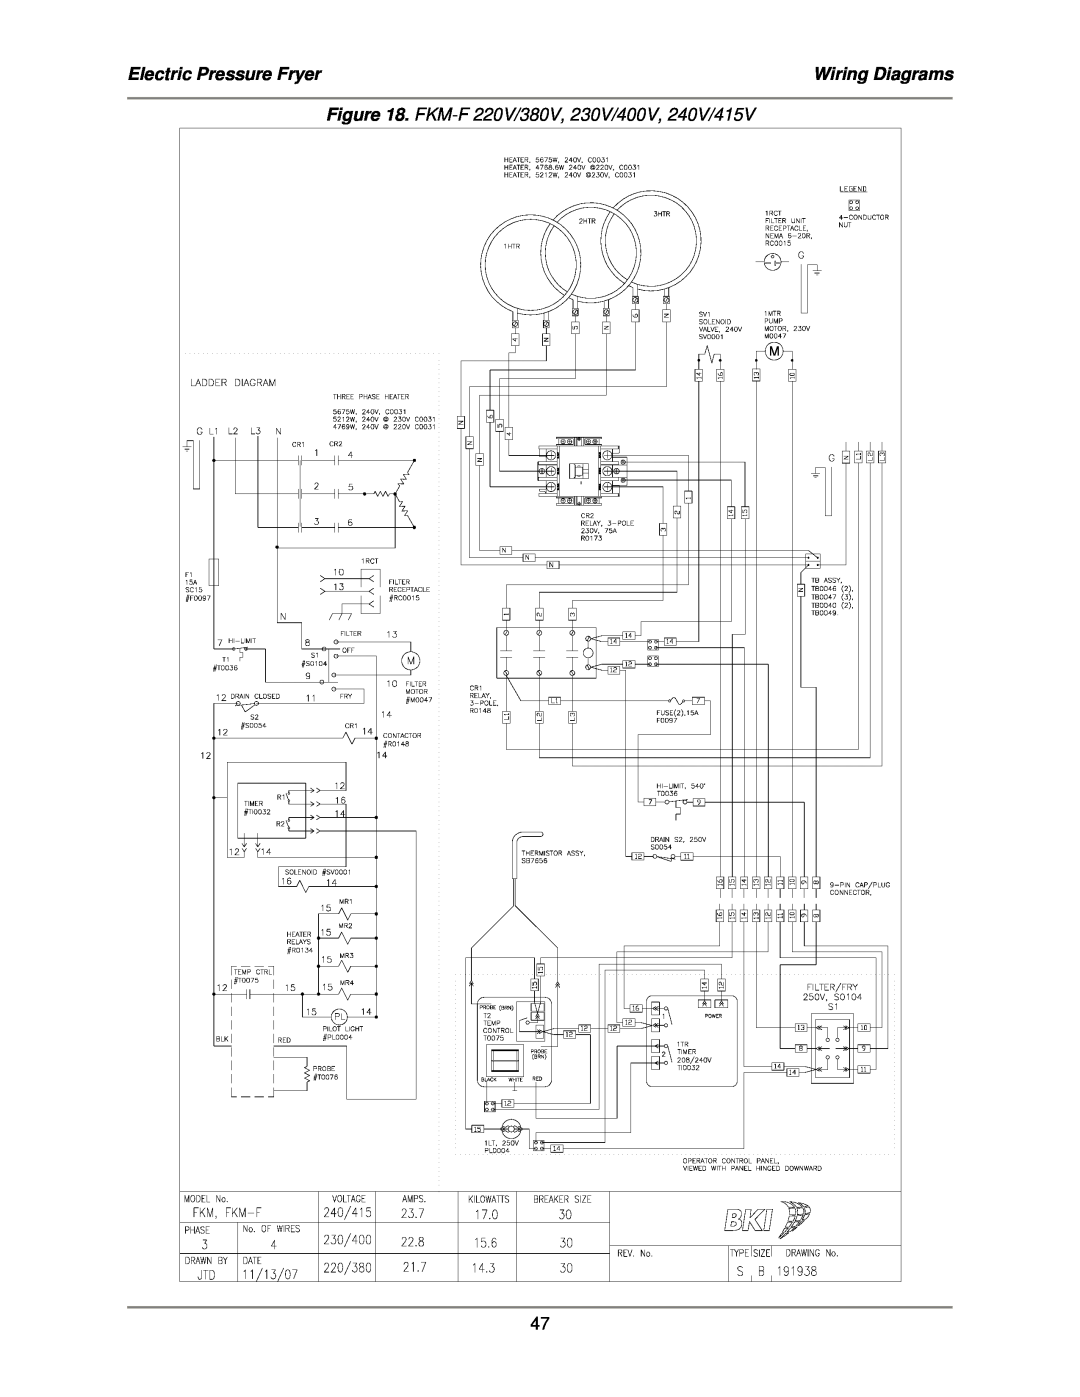 Bakers Pride Oven FKM-FC service manual Electric Pressure Fryer, Wiring Diagrams, FKM-F220V/380V, 230V/400V, 240V/415V 